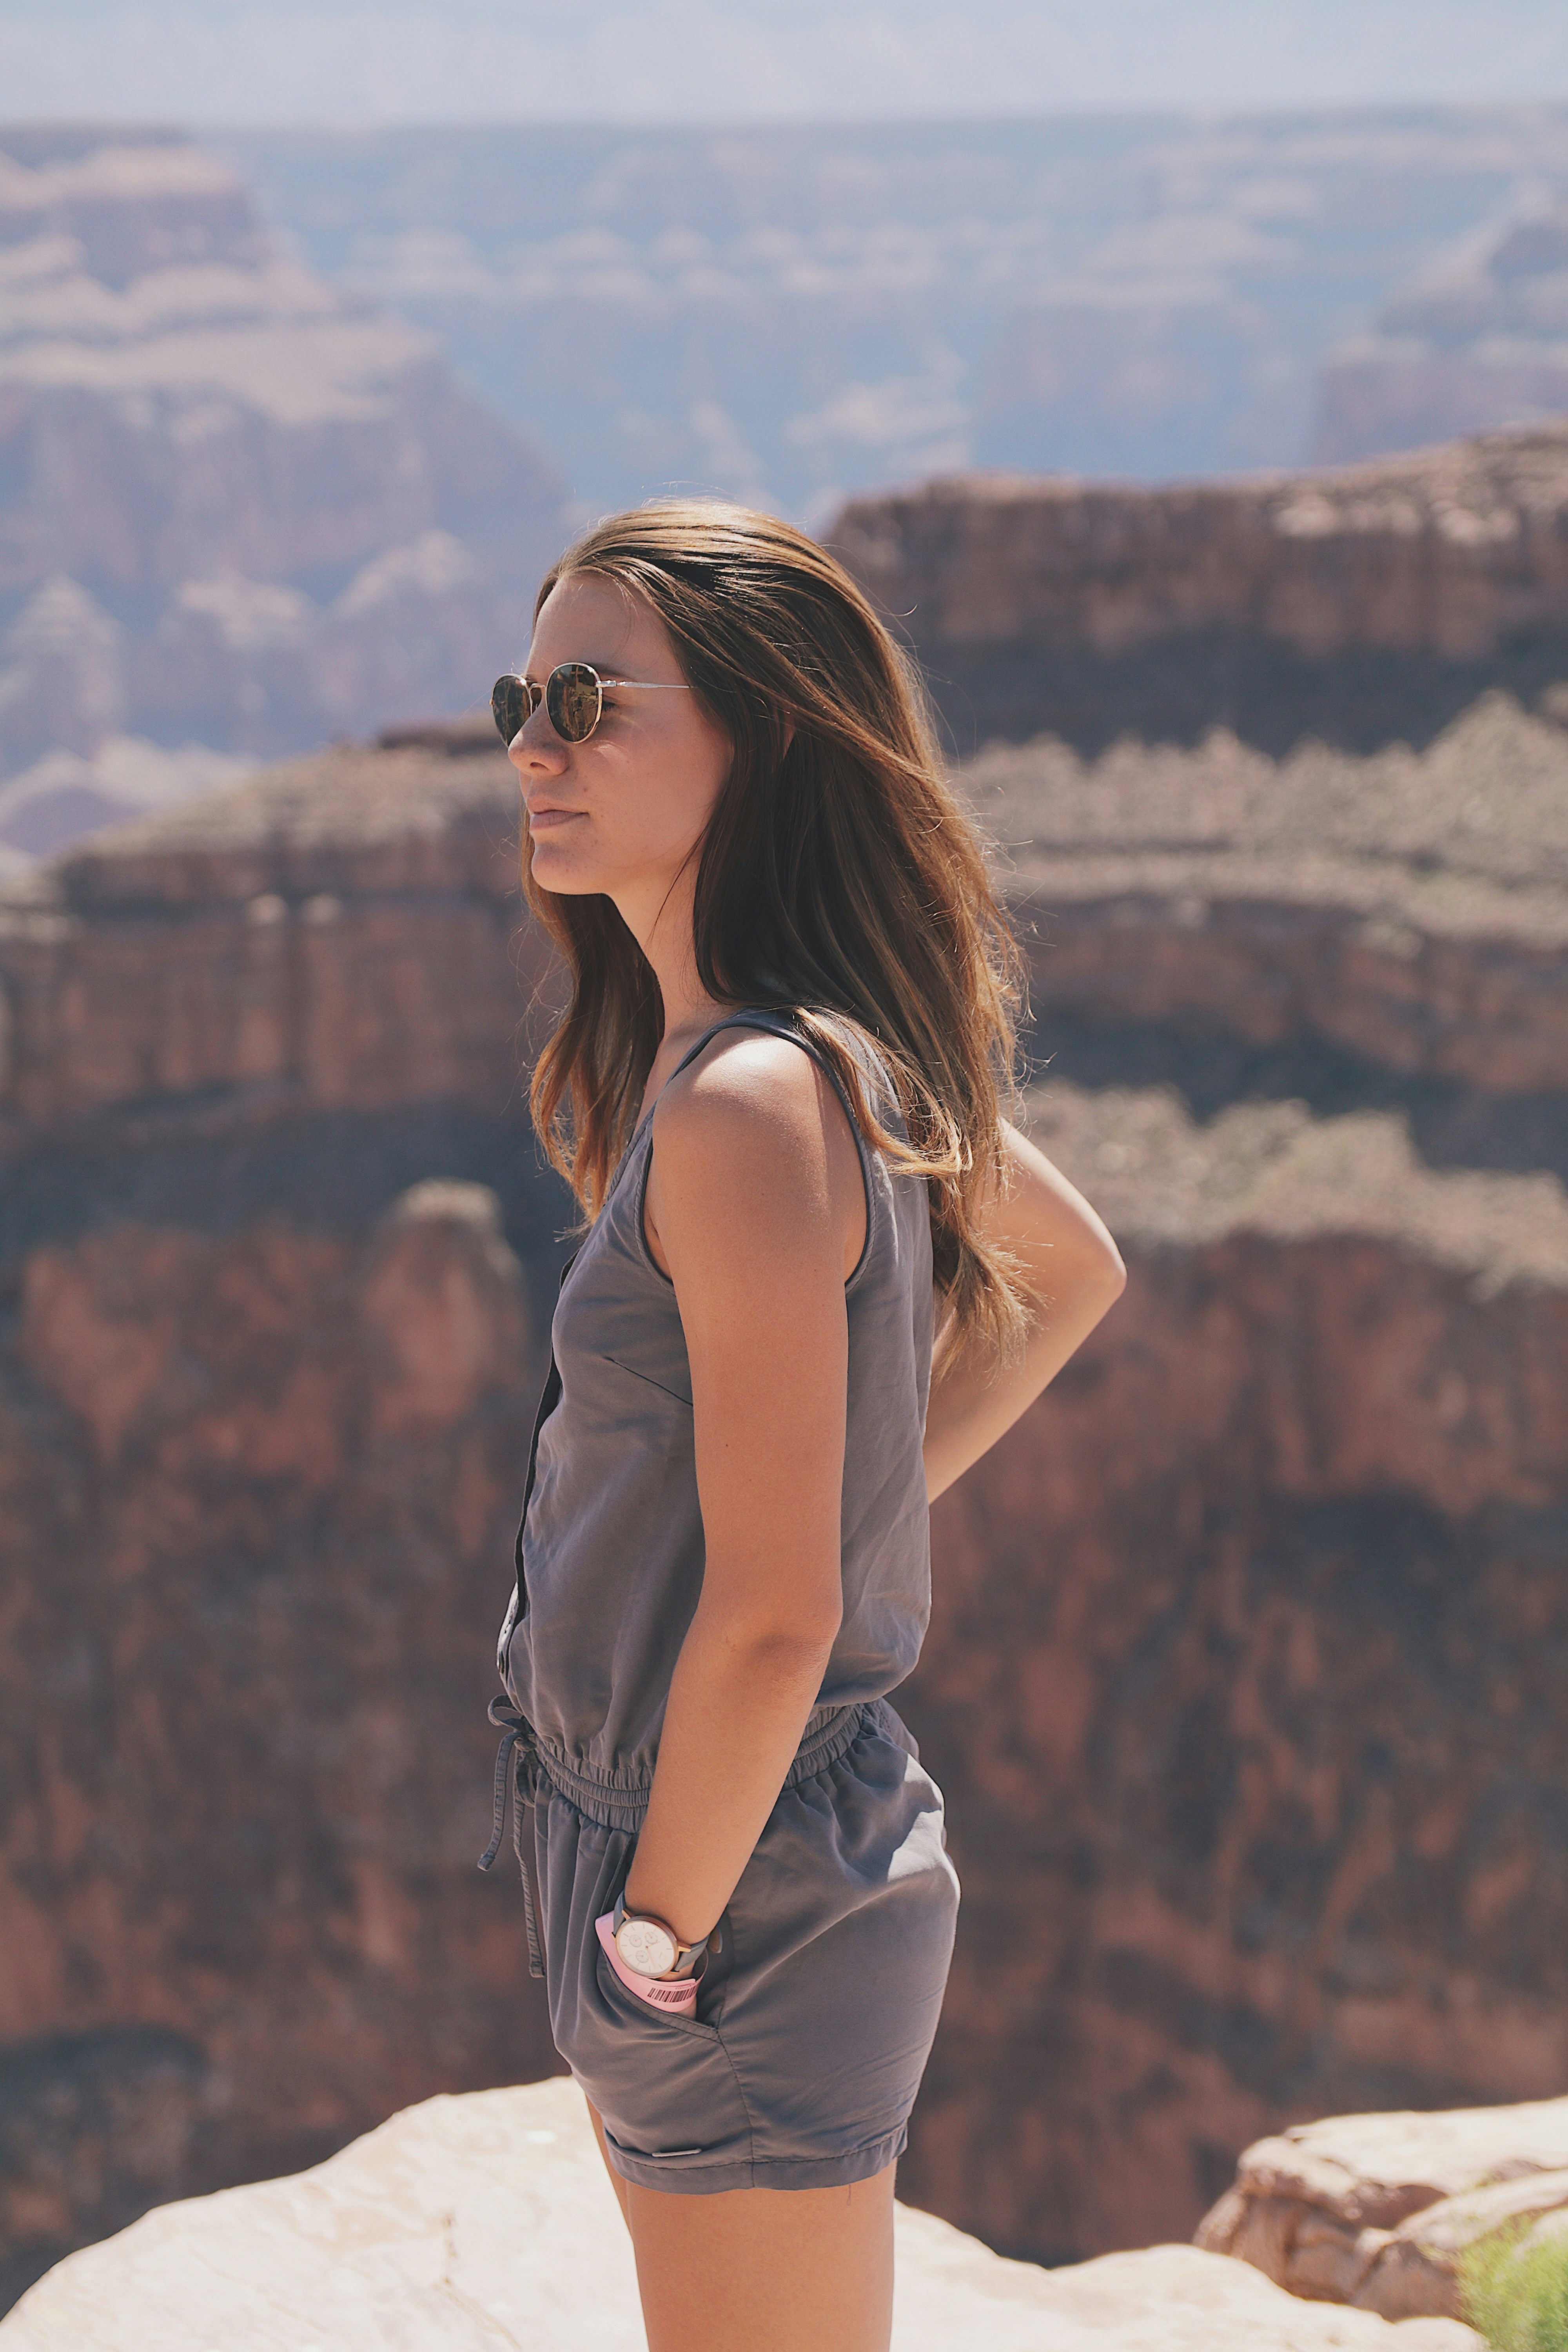 Girl at the Grand Canyon